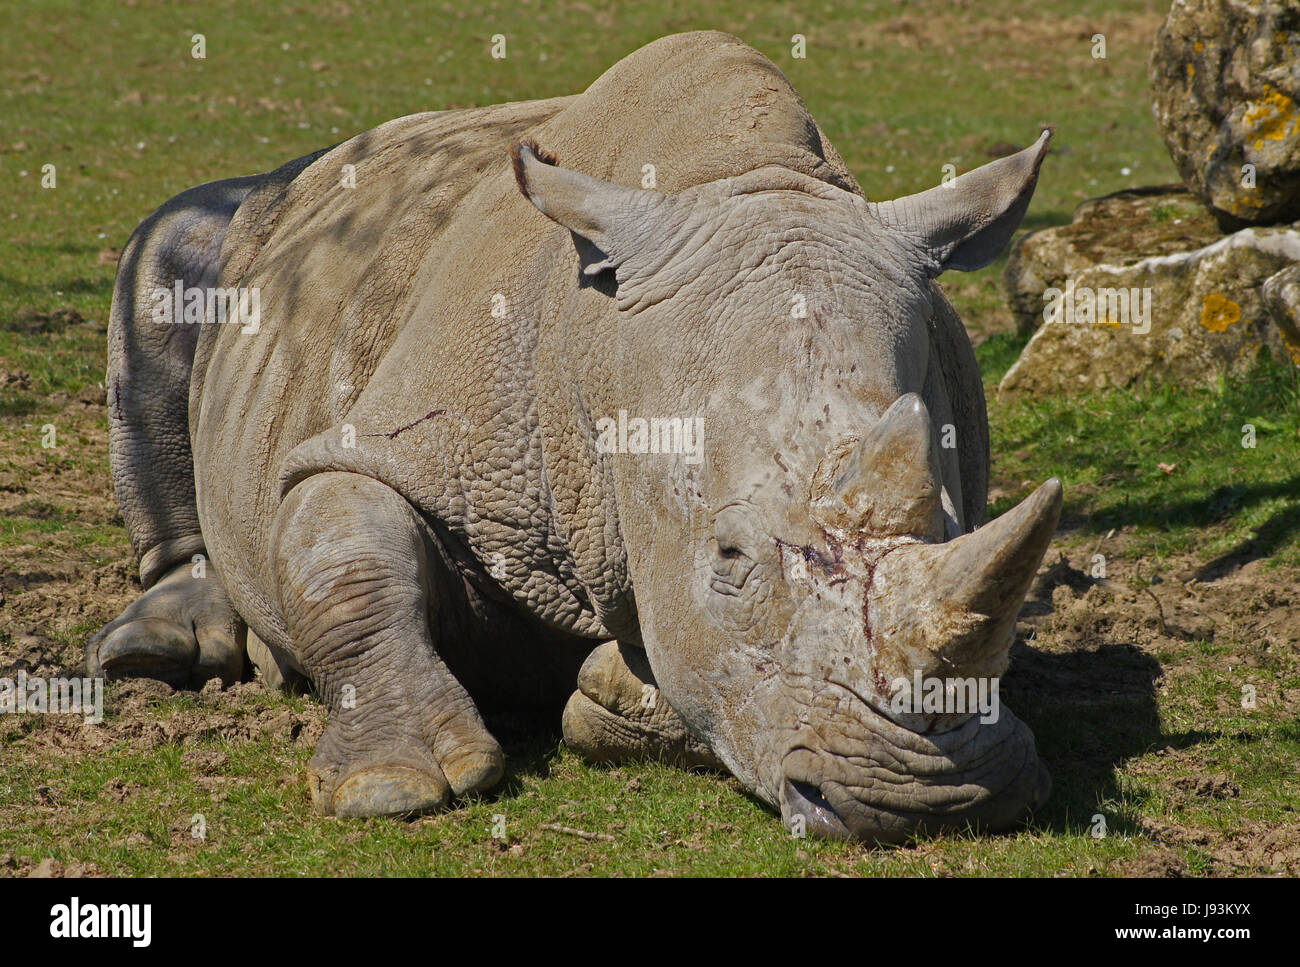 rhinoceros 6 cut a cross section